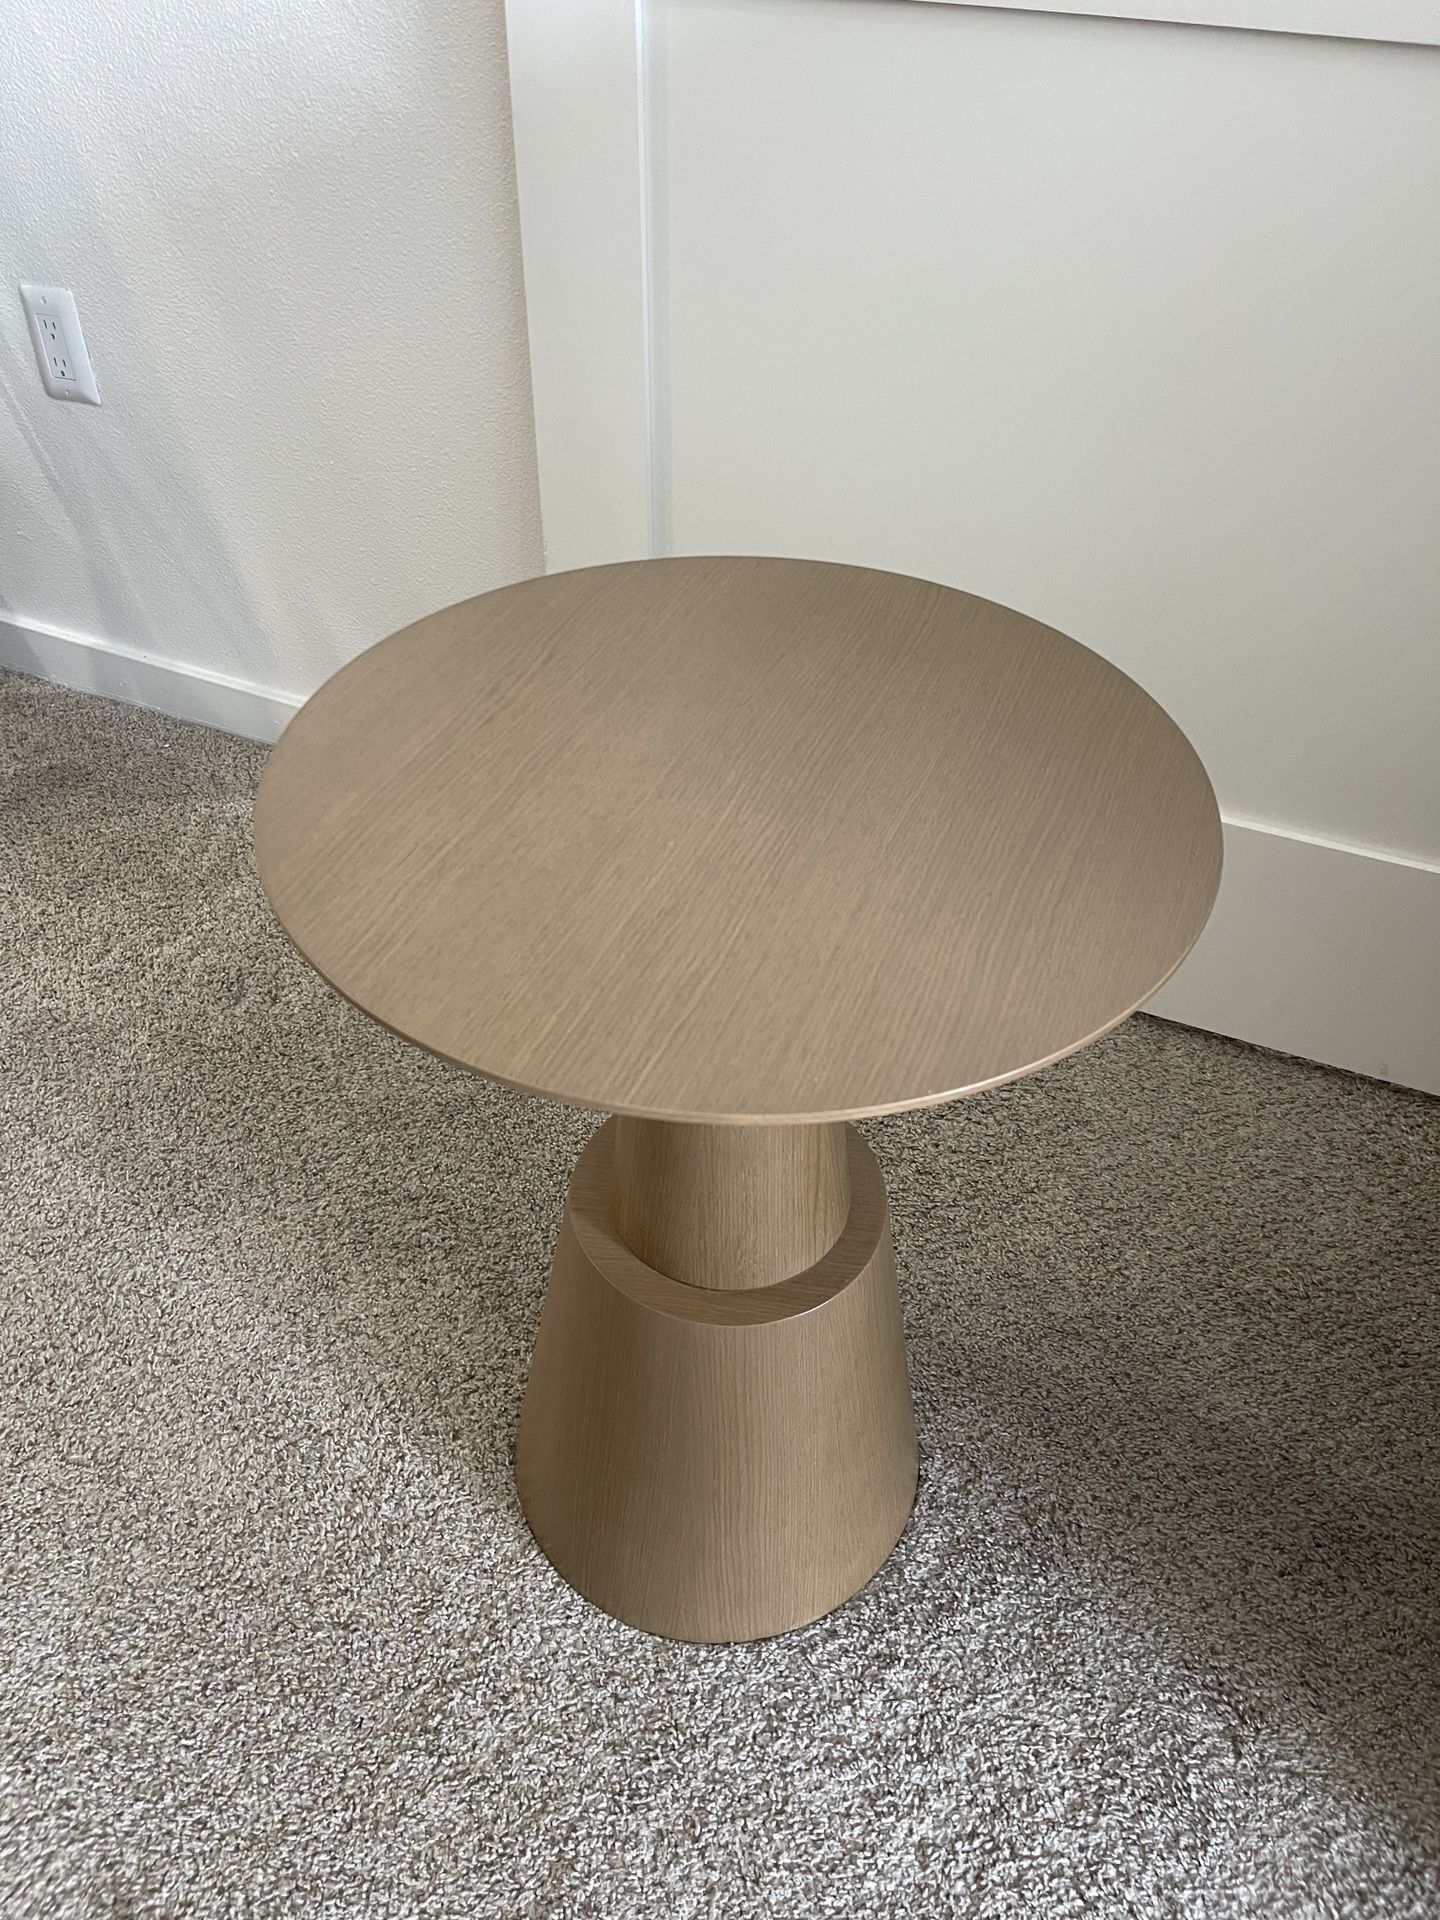 Wood Side Table 